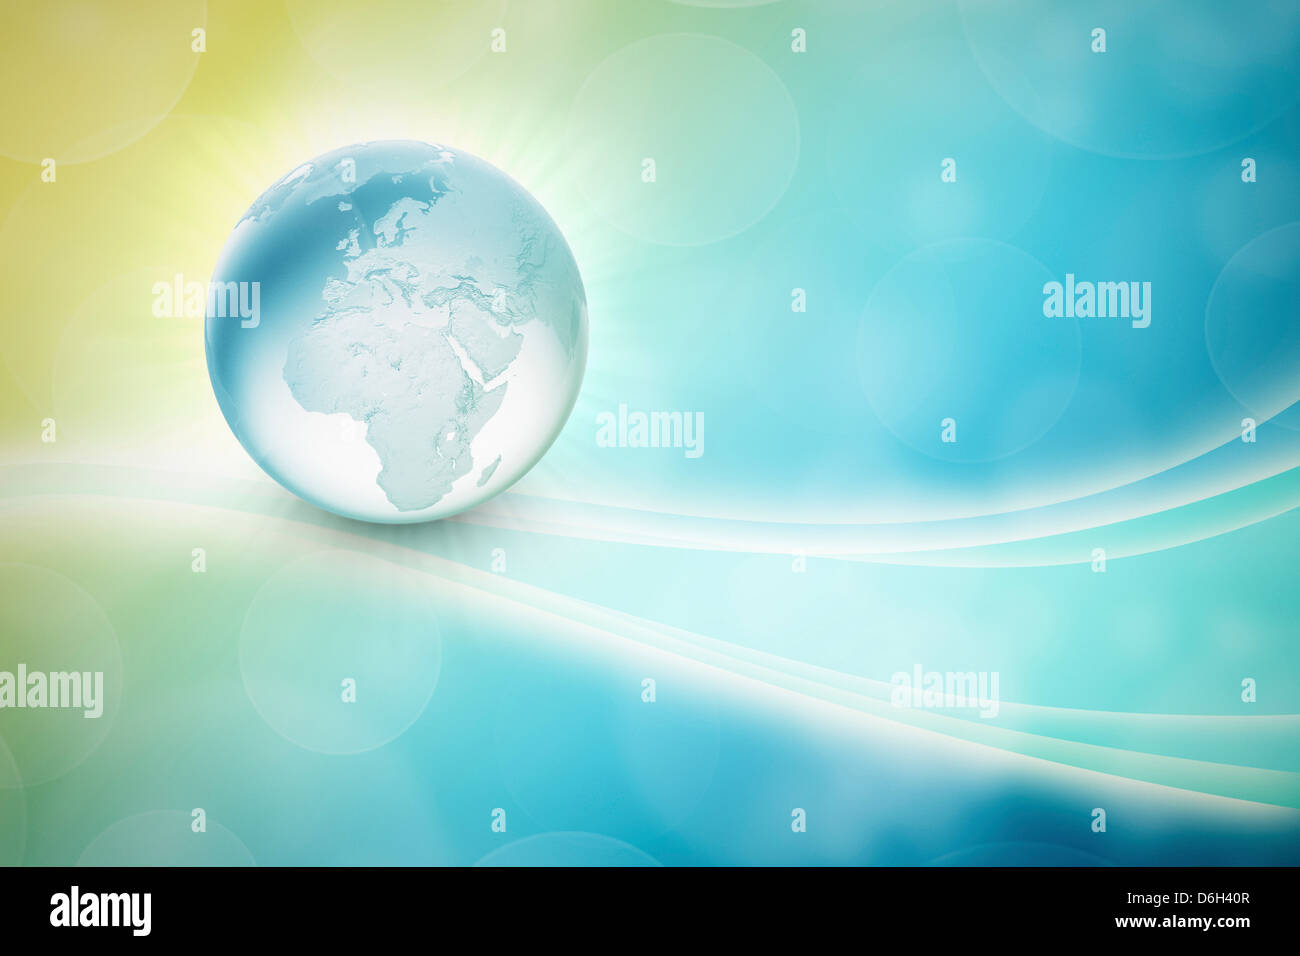 Illustration of glowing globe Stock Photo